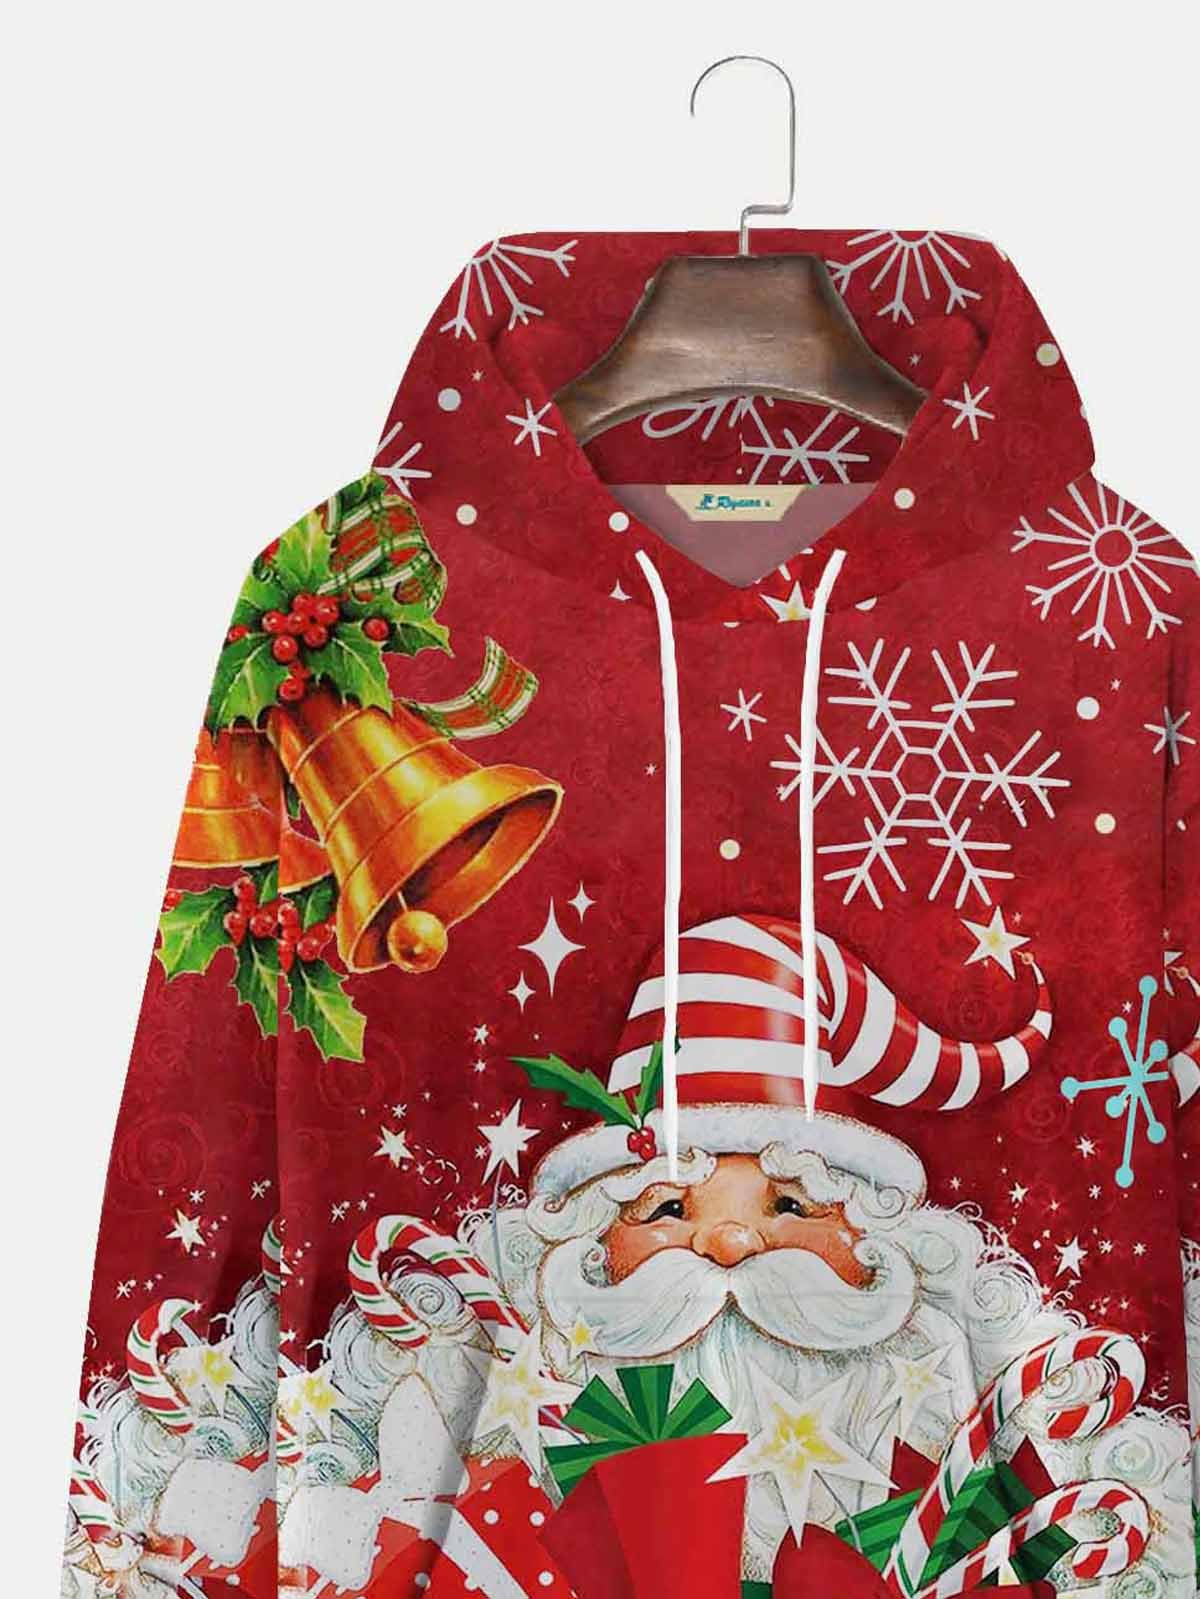 Royaura Men's Christmas Hoodies Santa Gift Candy Cane Bells Red Plus Size Sweatshirts